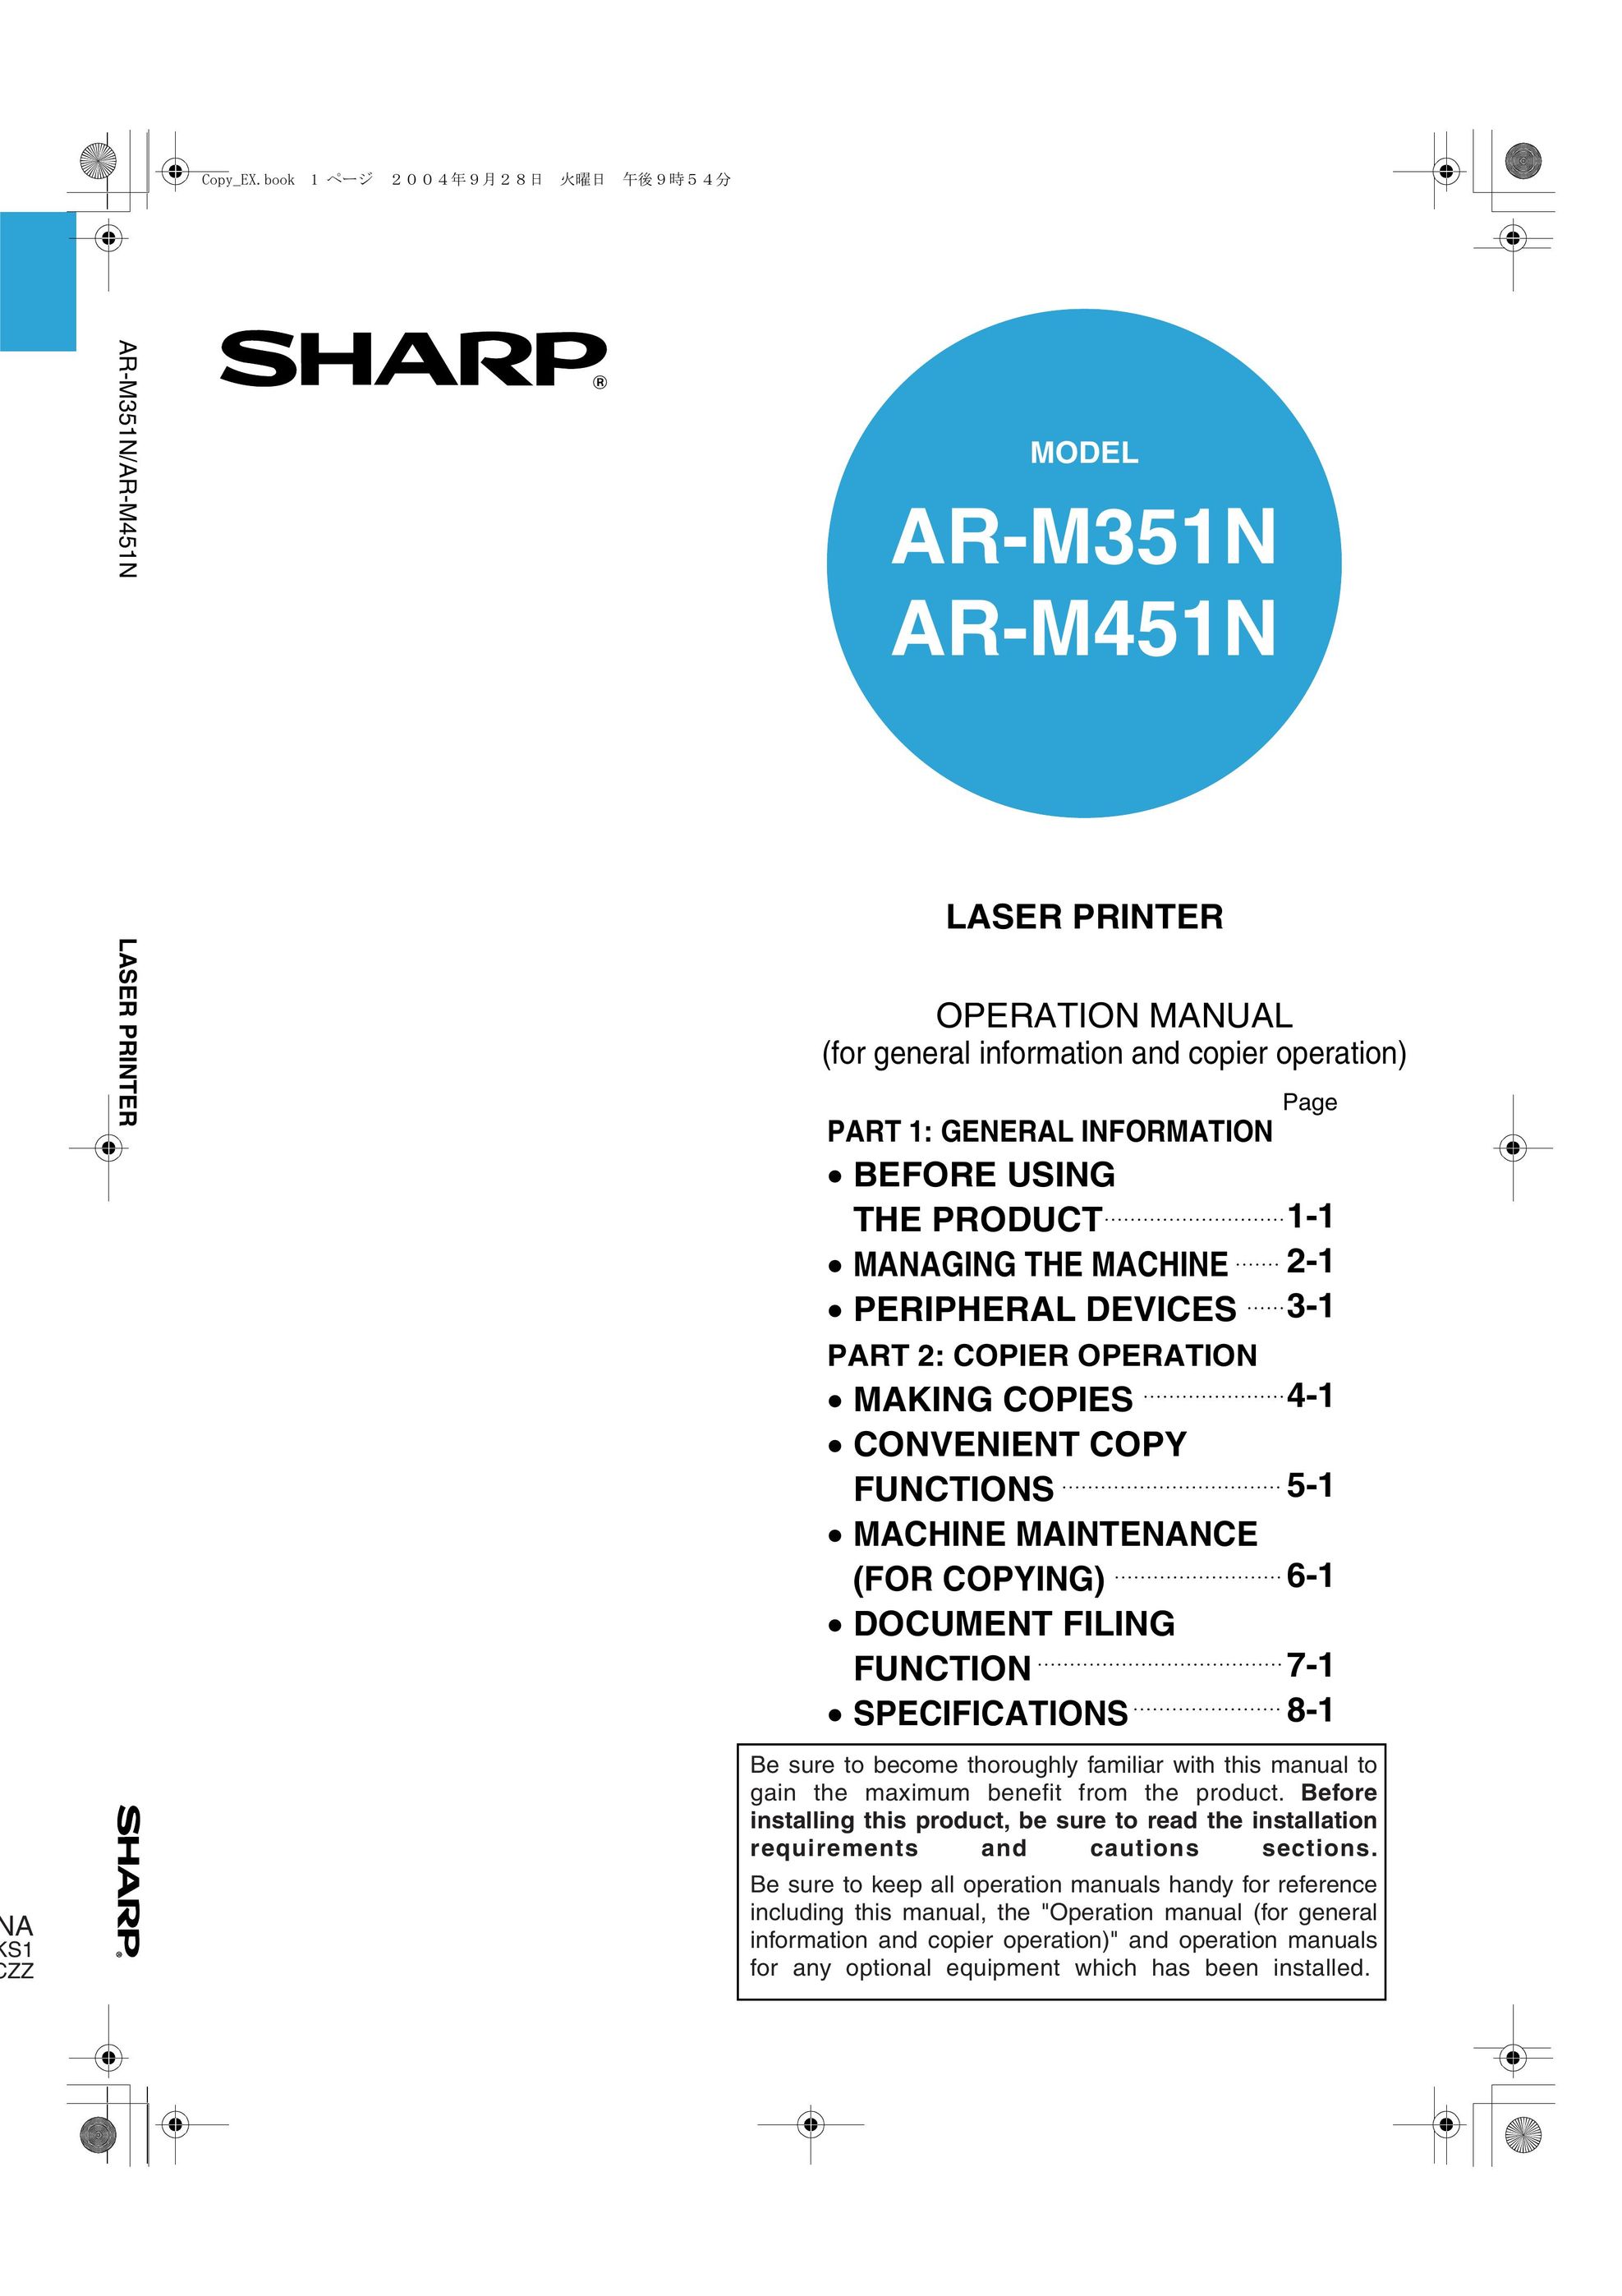 Sharp AR-M451N Printer User Manual